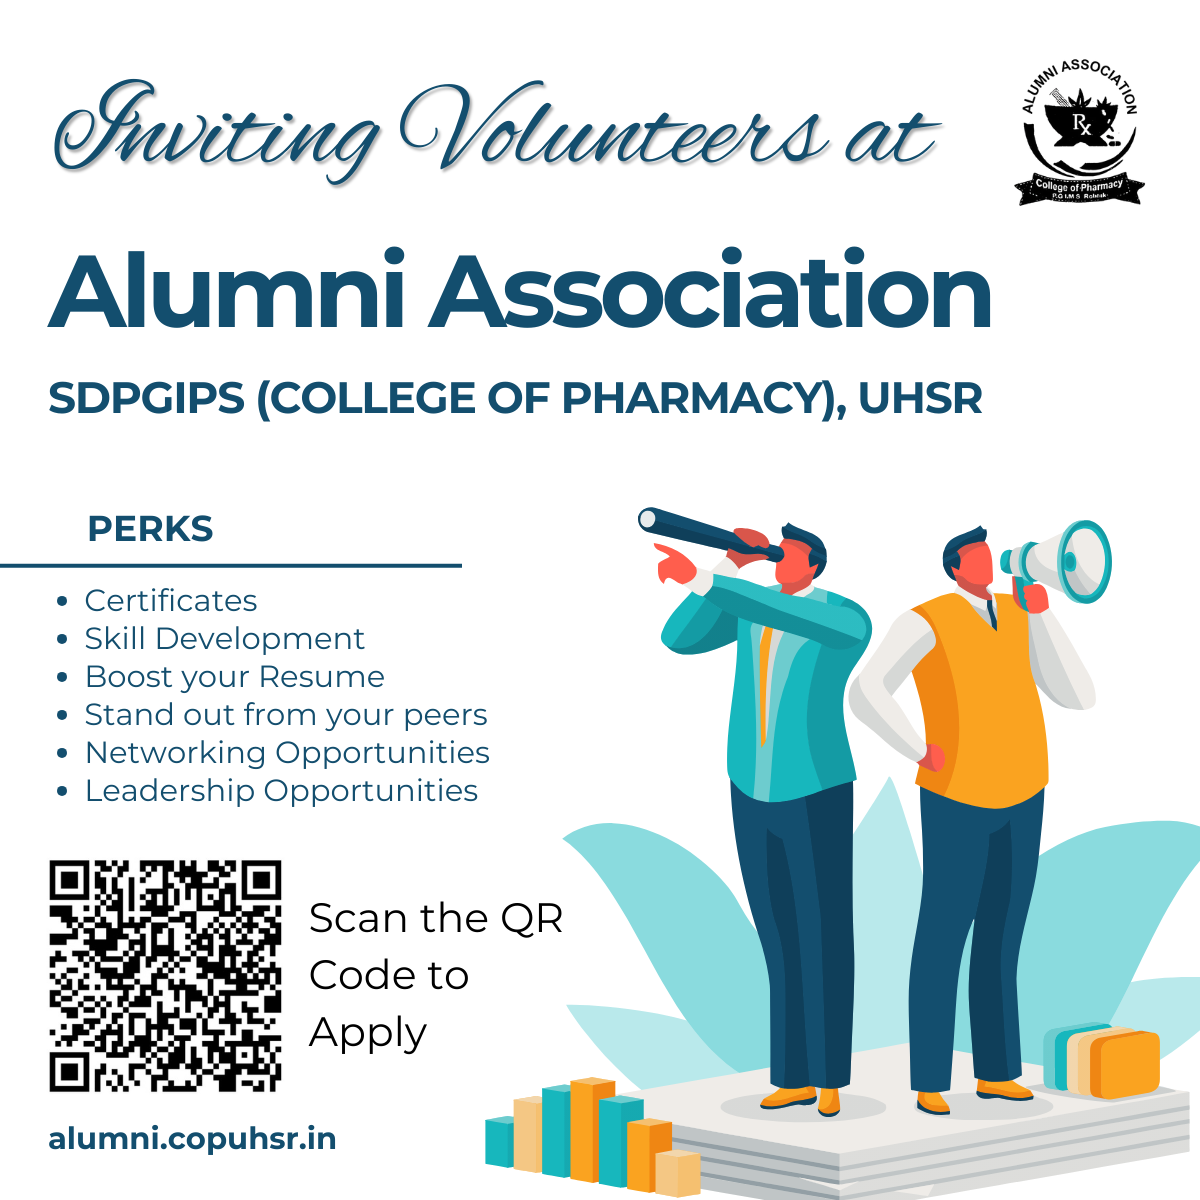 Inviting Volunteers at Alumni Association SDPGIPS (College of Pharmacy) UHSR